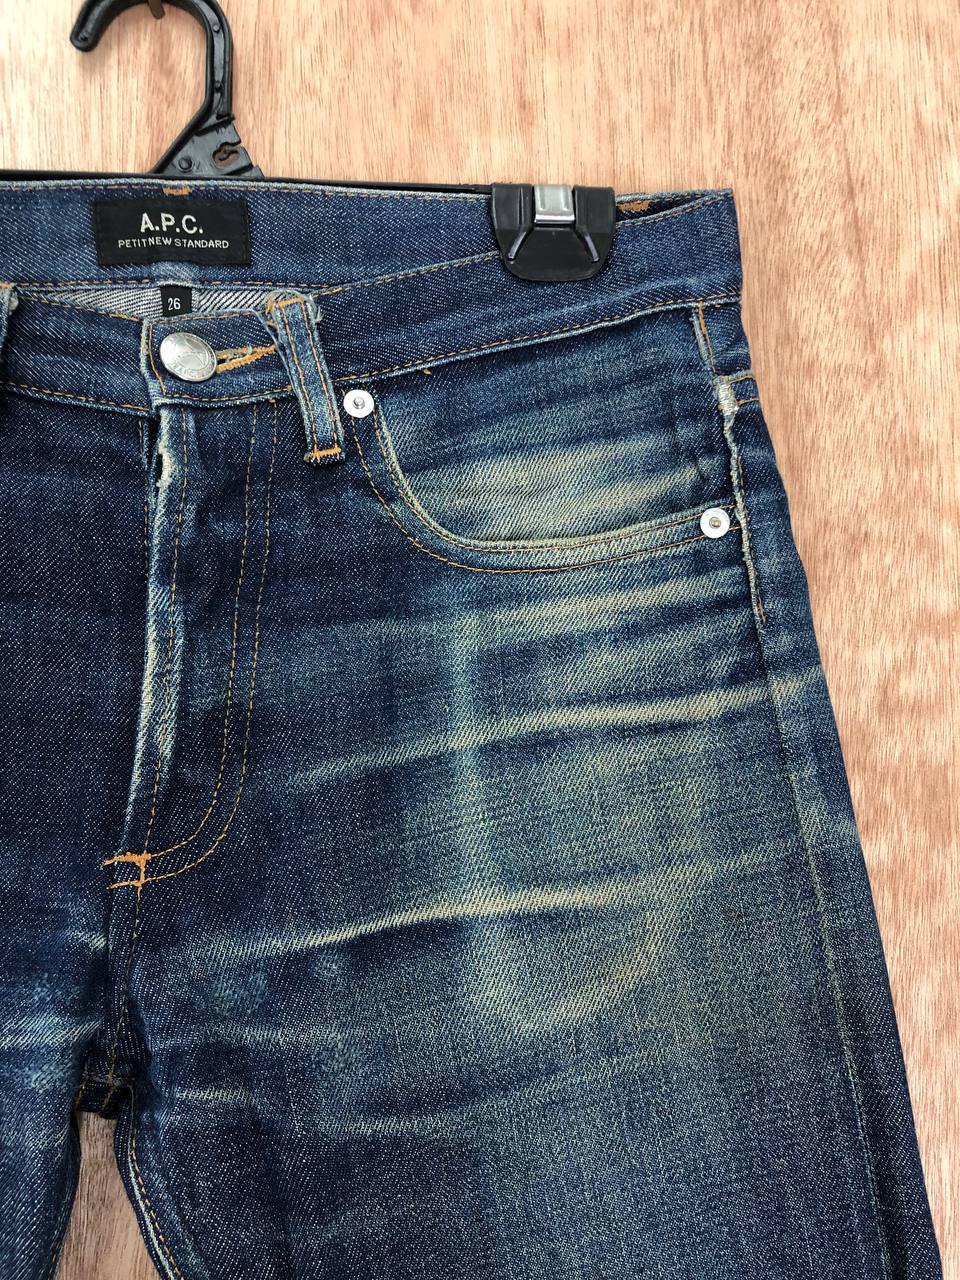 APC Petit Standard Jeans Distressed Selvedge - 5